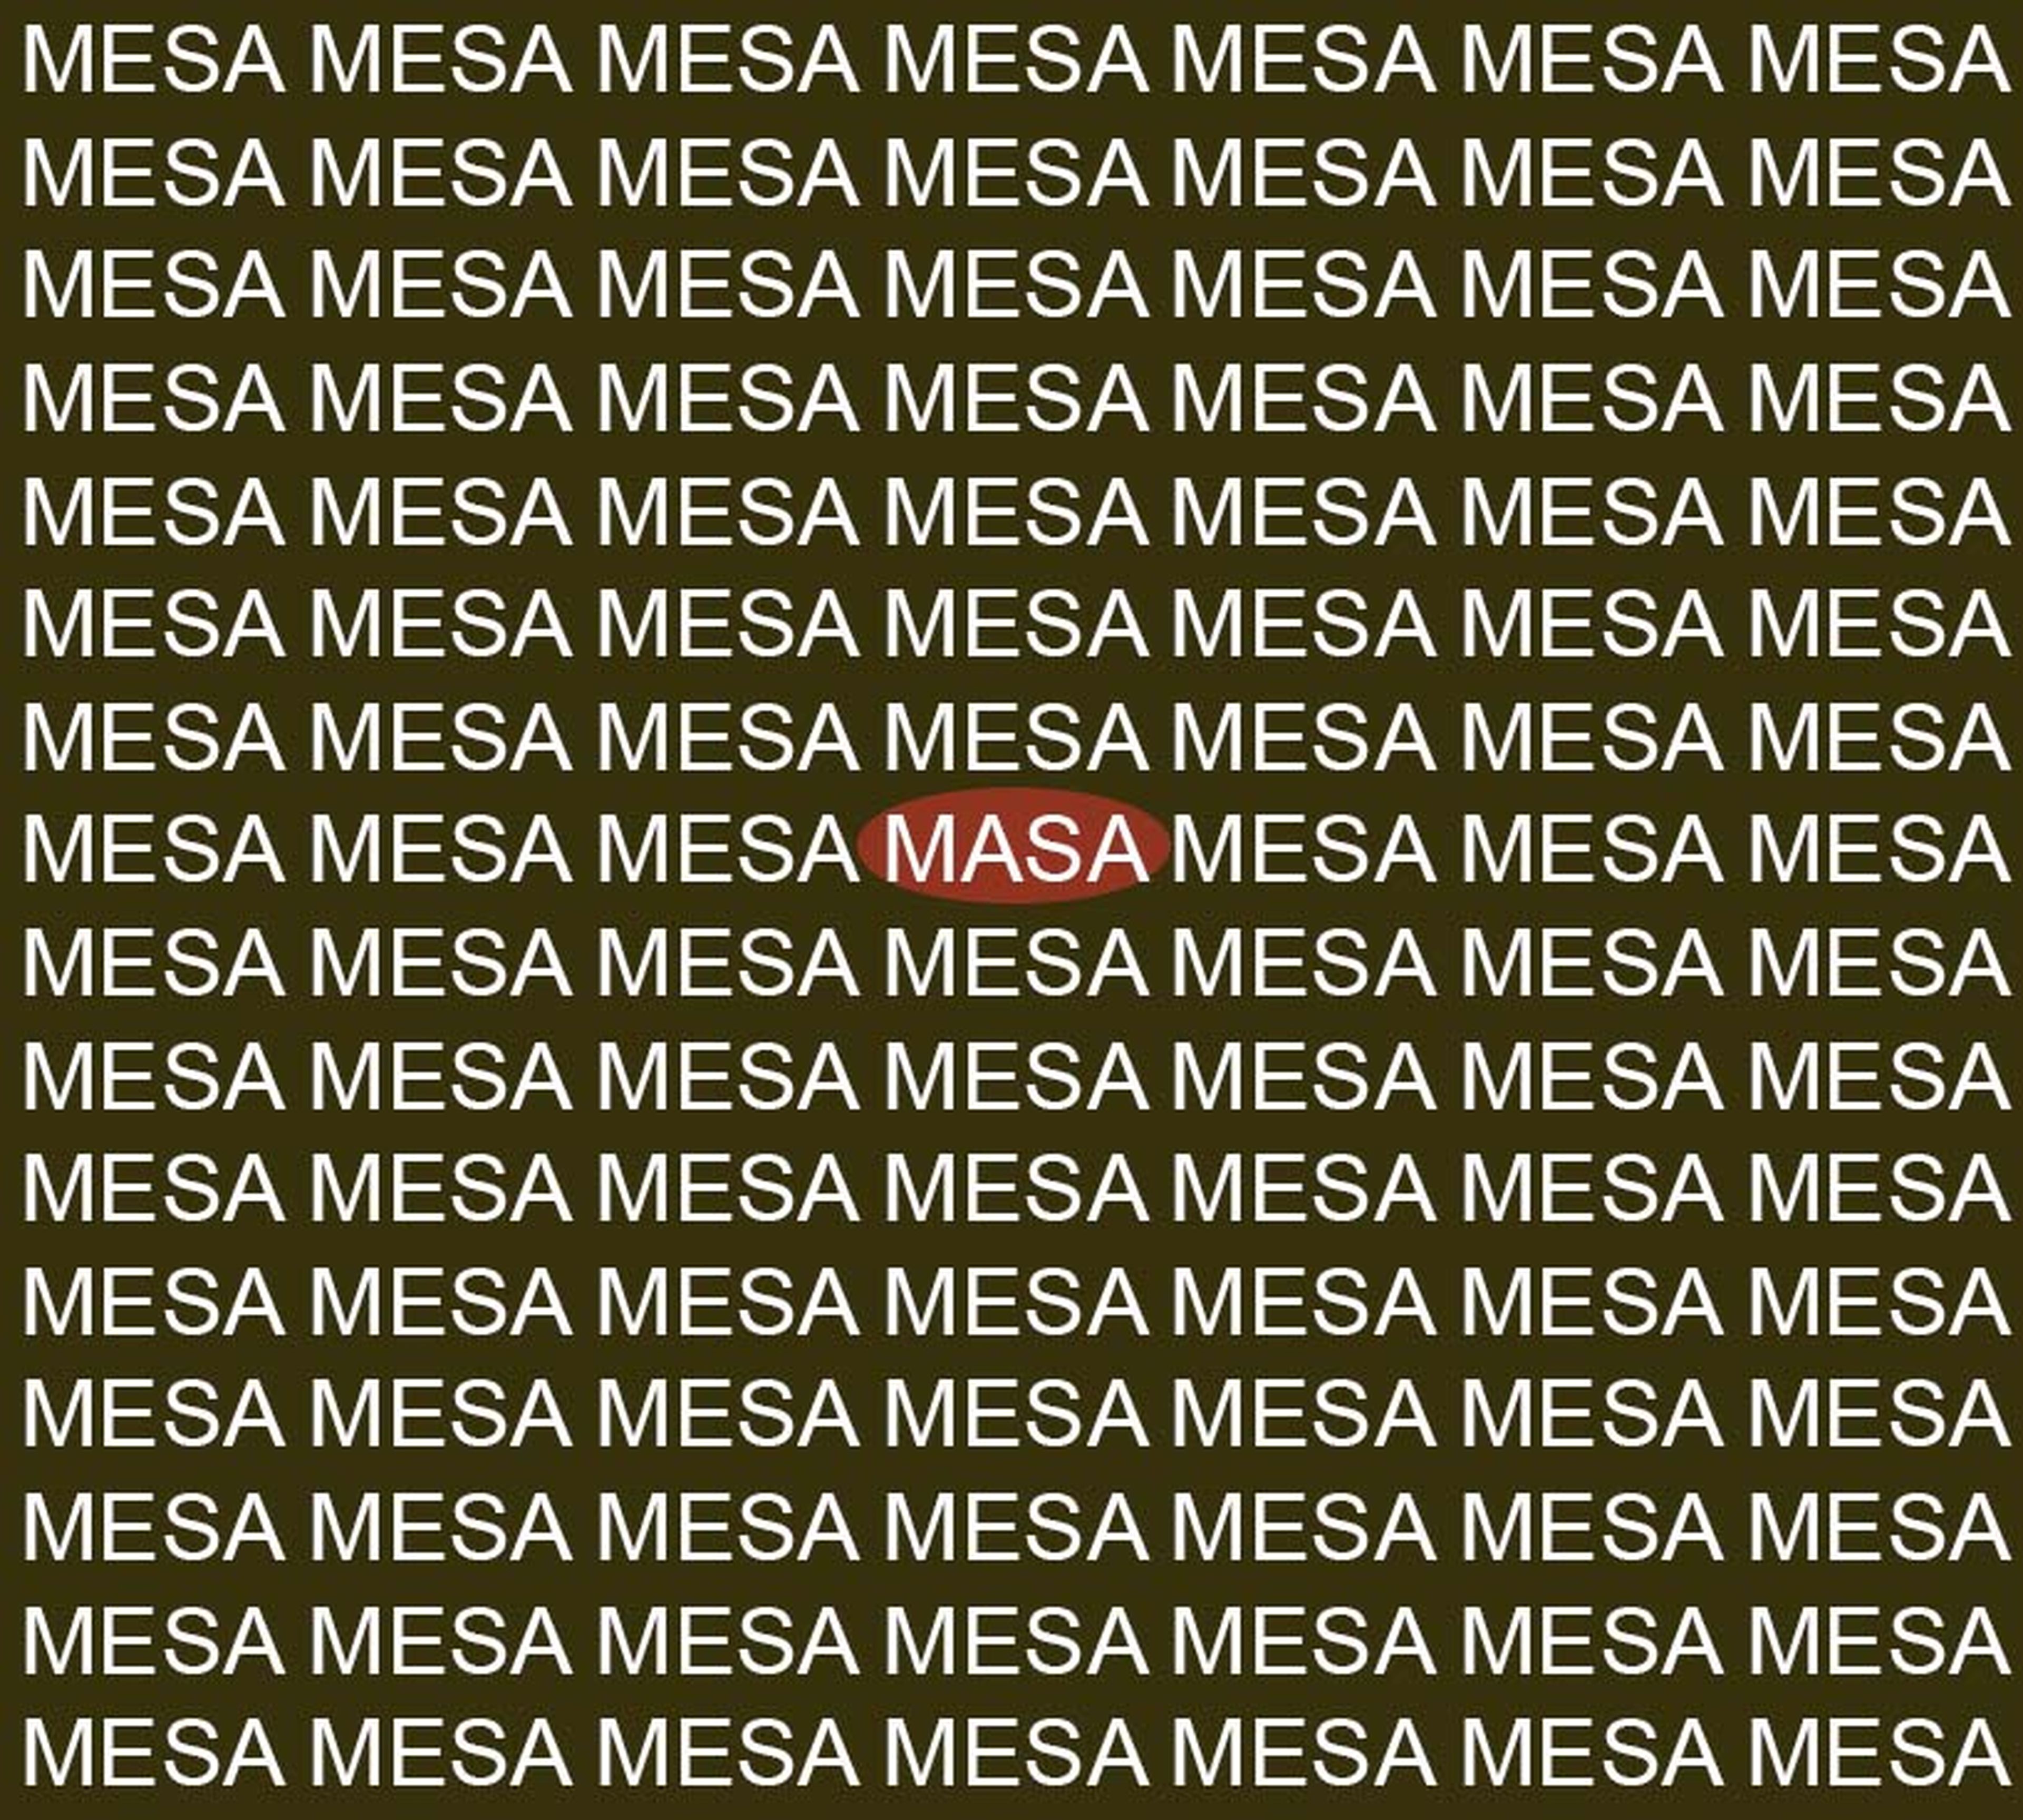 Reto visual encuentra la palabra masa